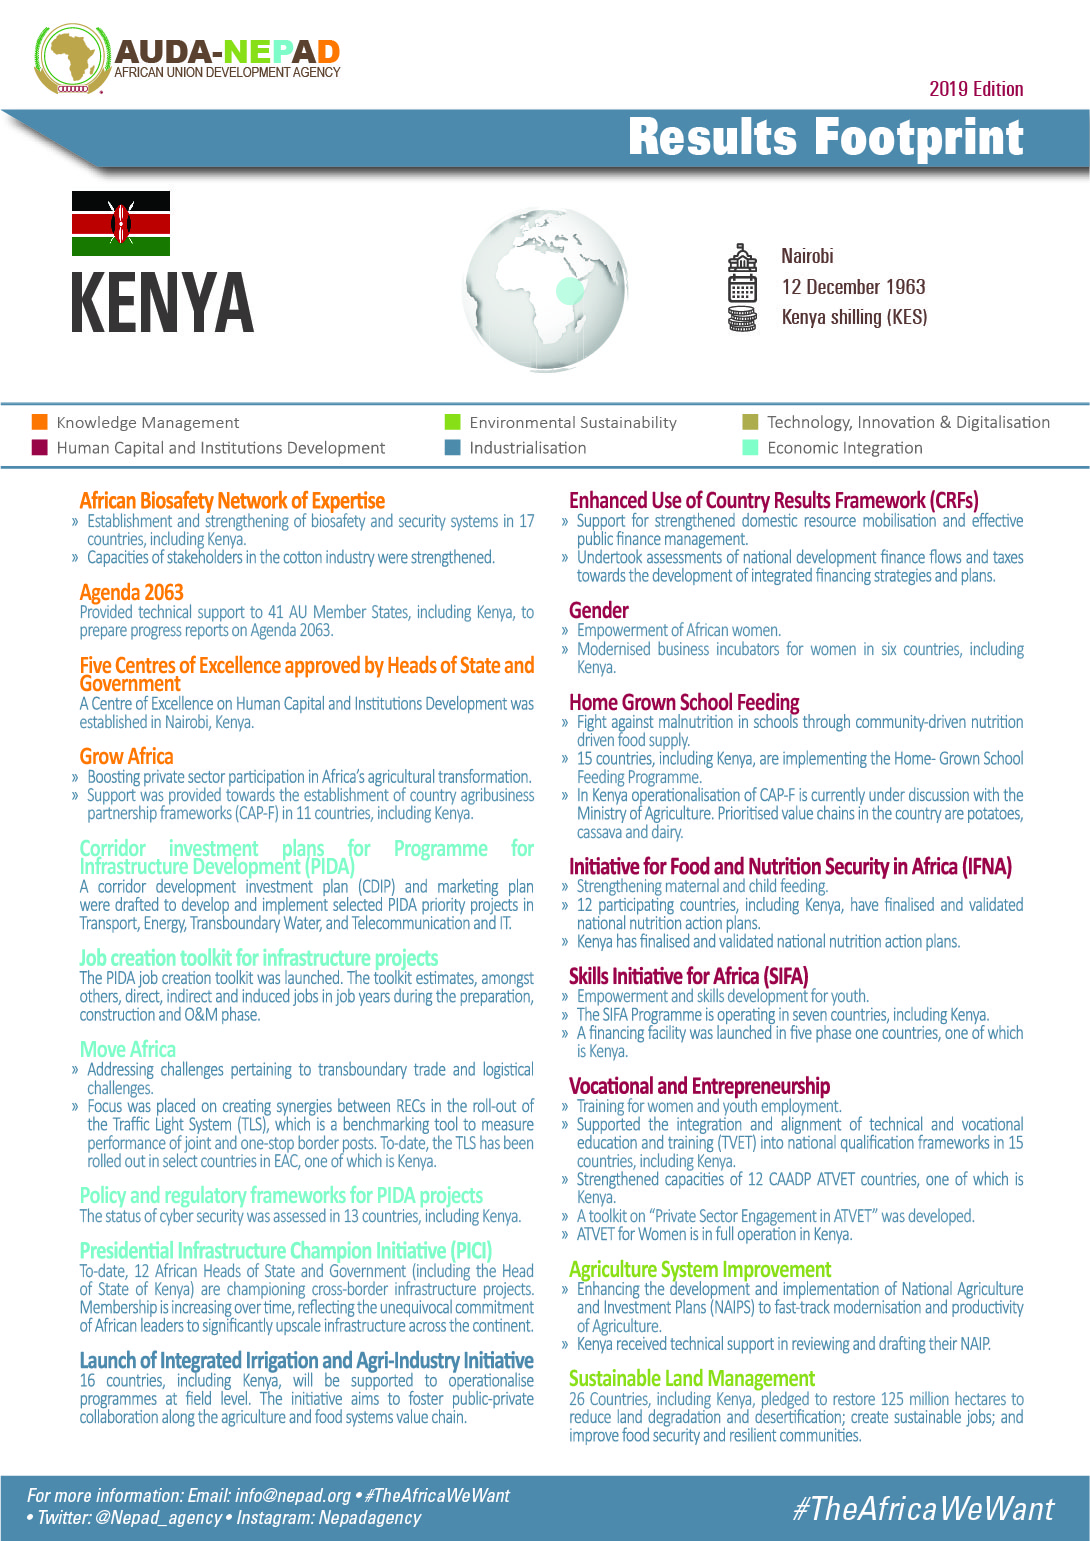 2019 AUDA-NEPAD Footprint: Country Profiles: Kenya